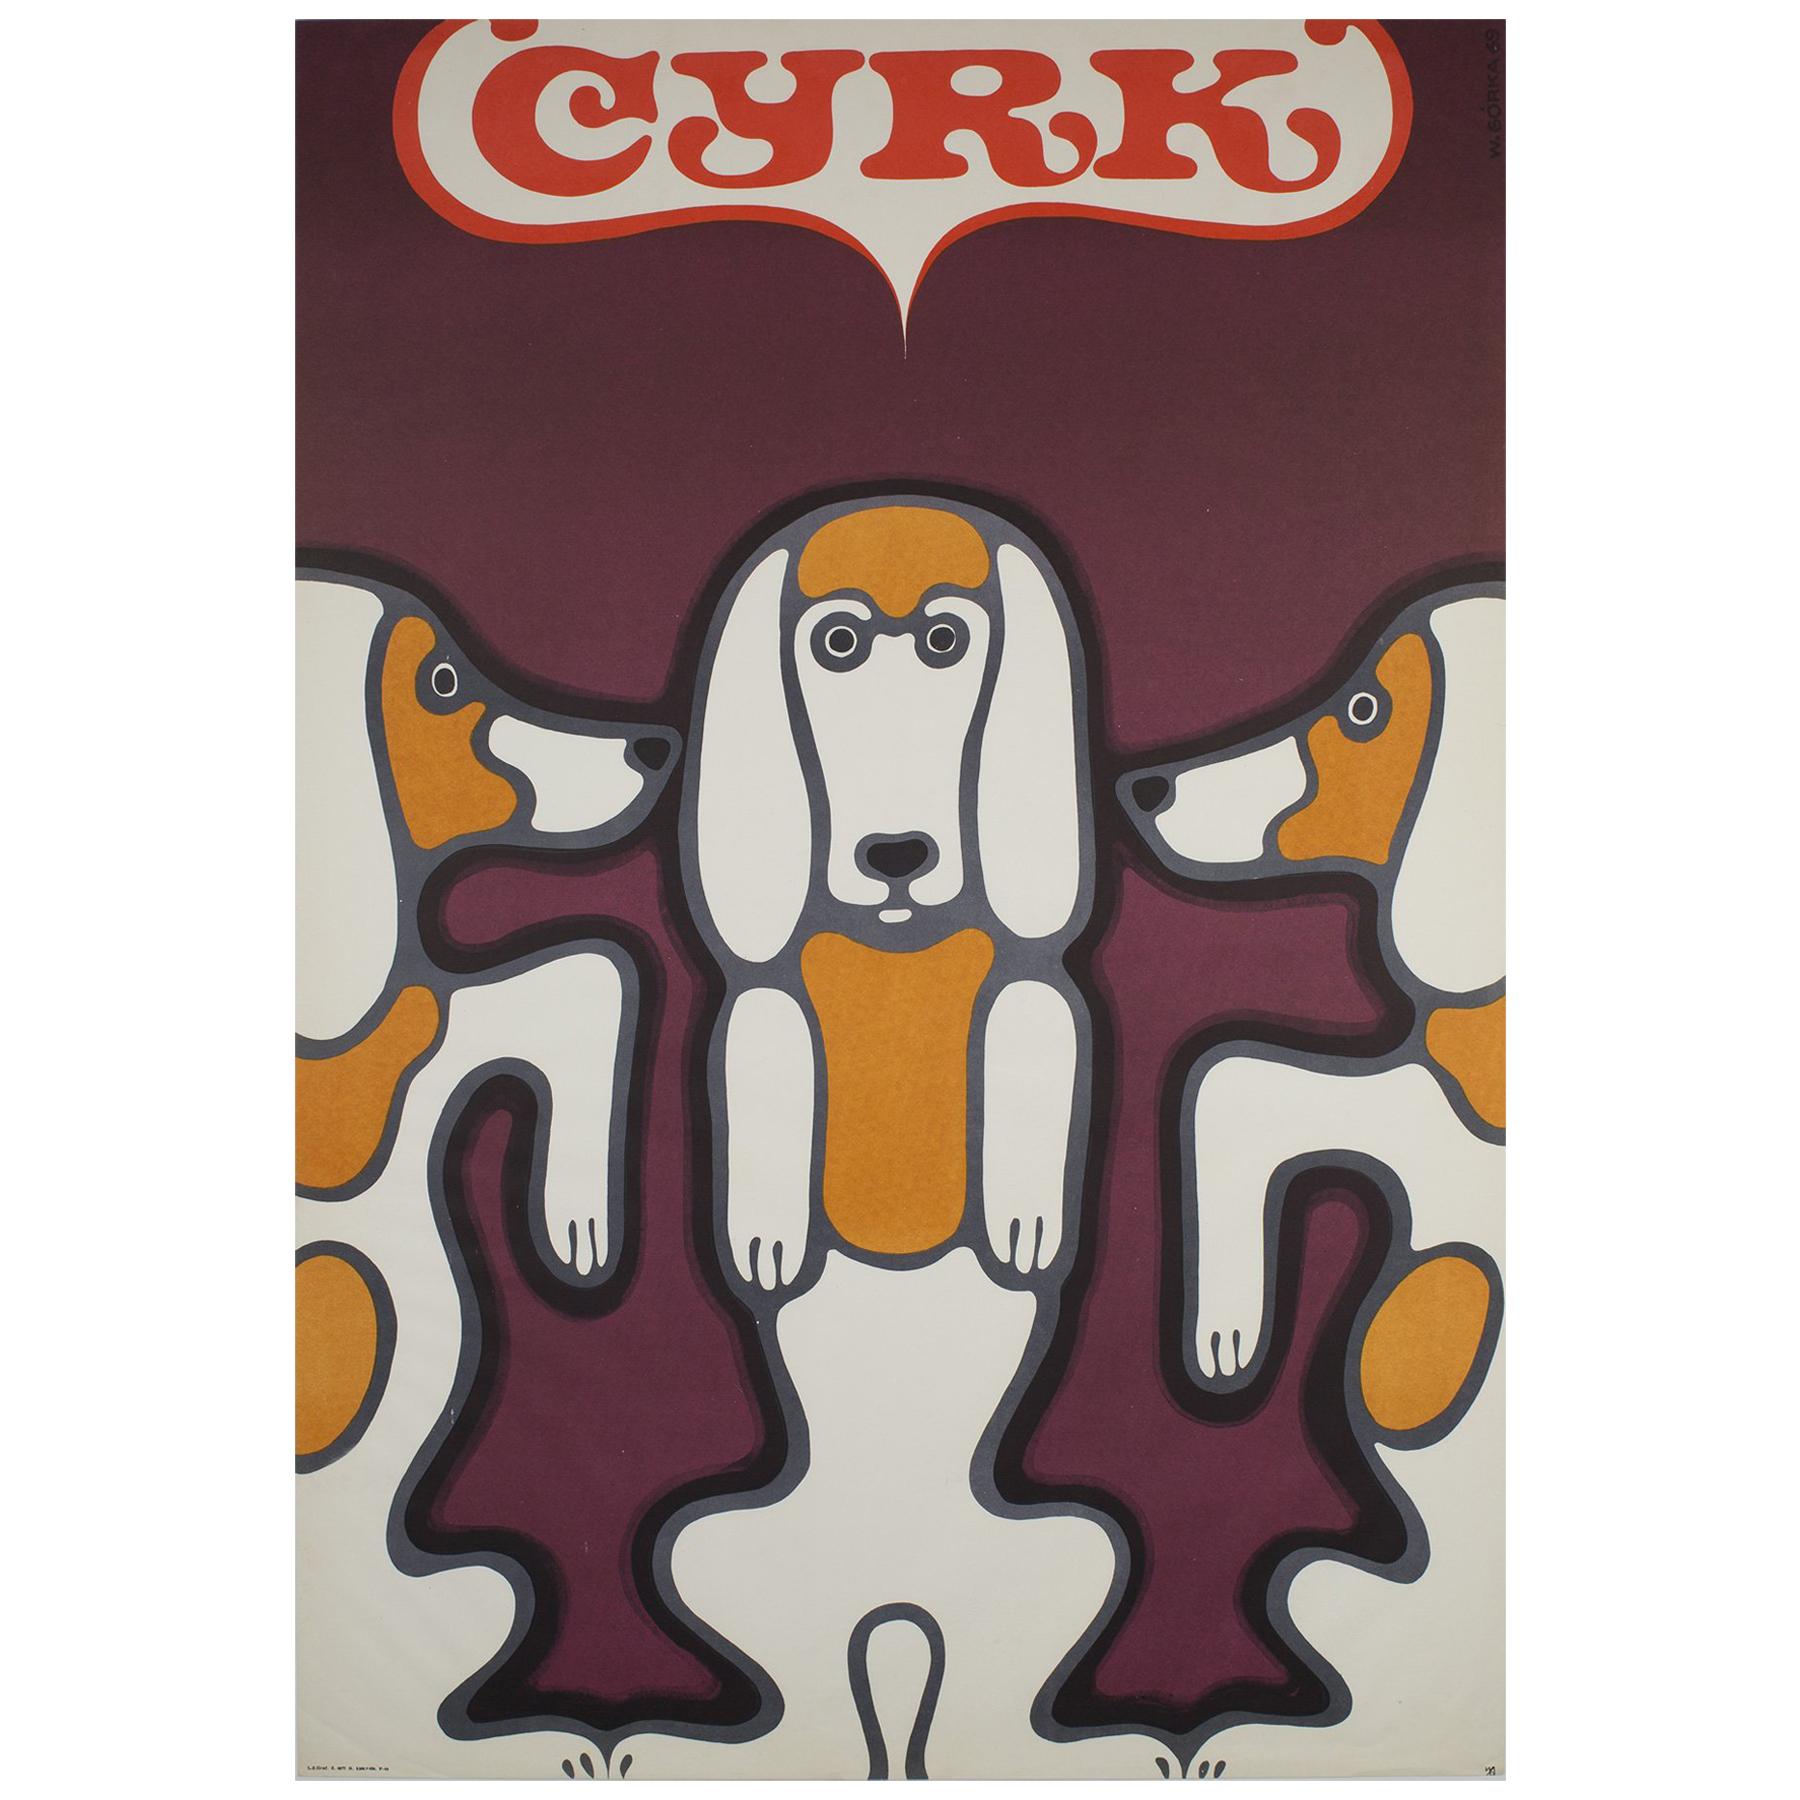 Original 1969 Polish CYRK ‘Circus; Poster, Three Beagles by Gorka